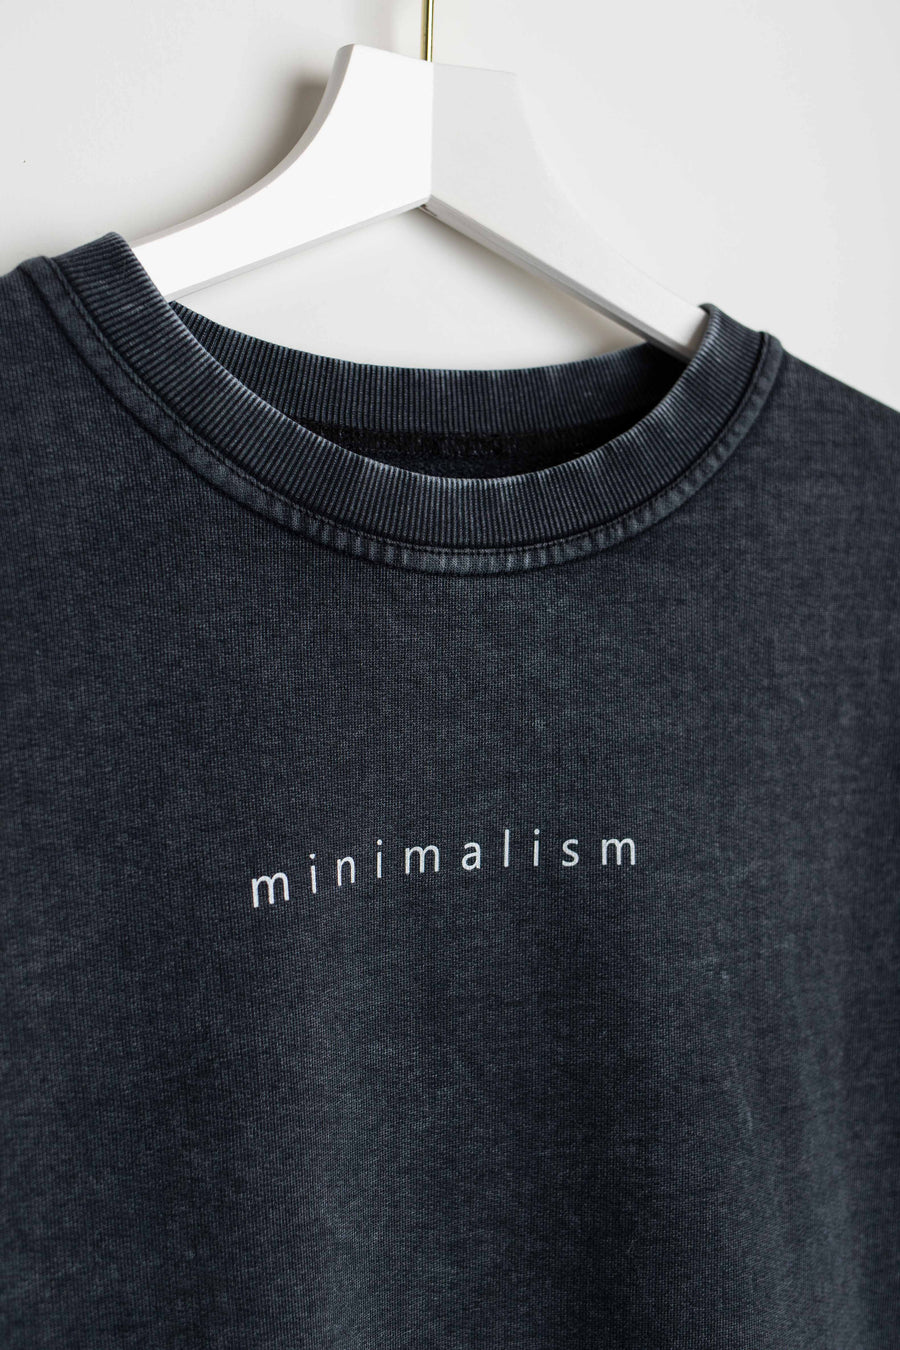 jackieandkate Sweatshirt minimalism grau